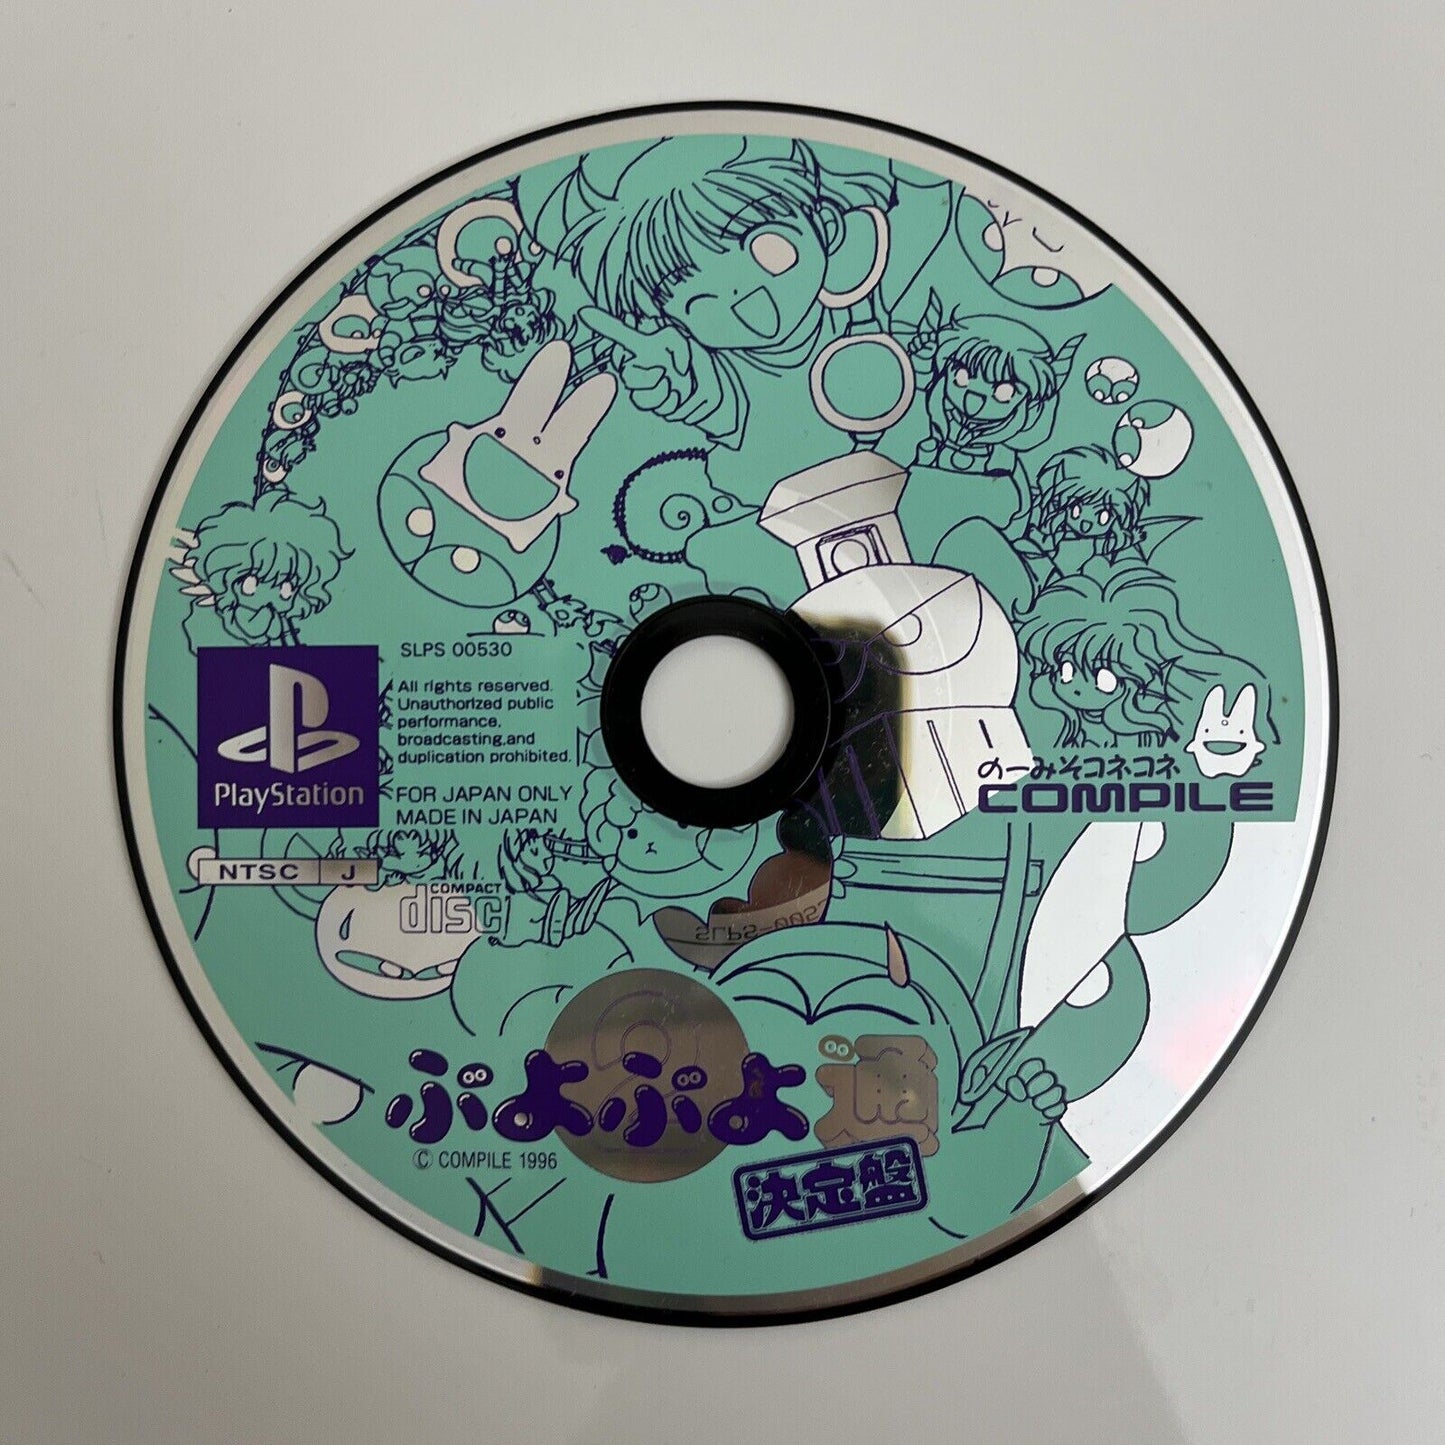 Puyo Puyo 2 - Sony PlayStation PS1 NTSC-J JAPAN 1996 Puzzle Game